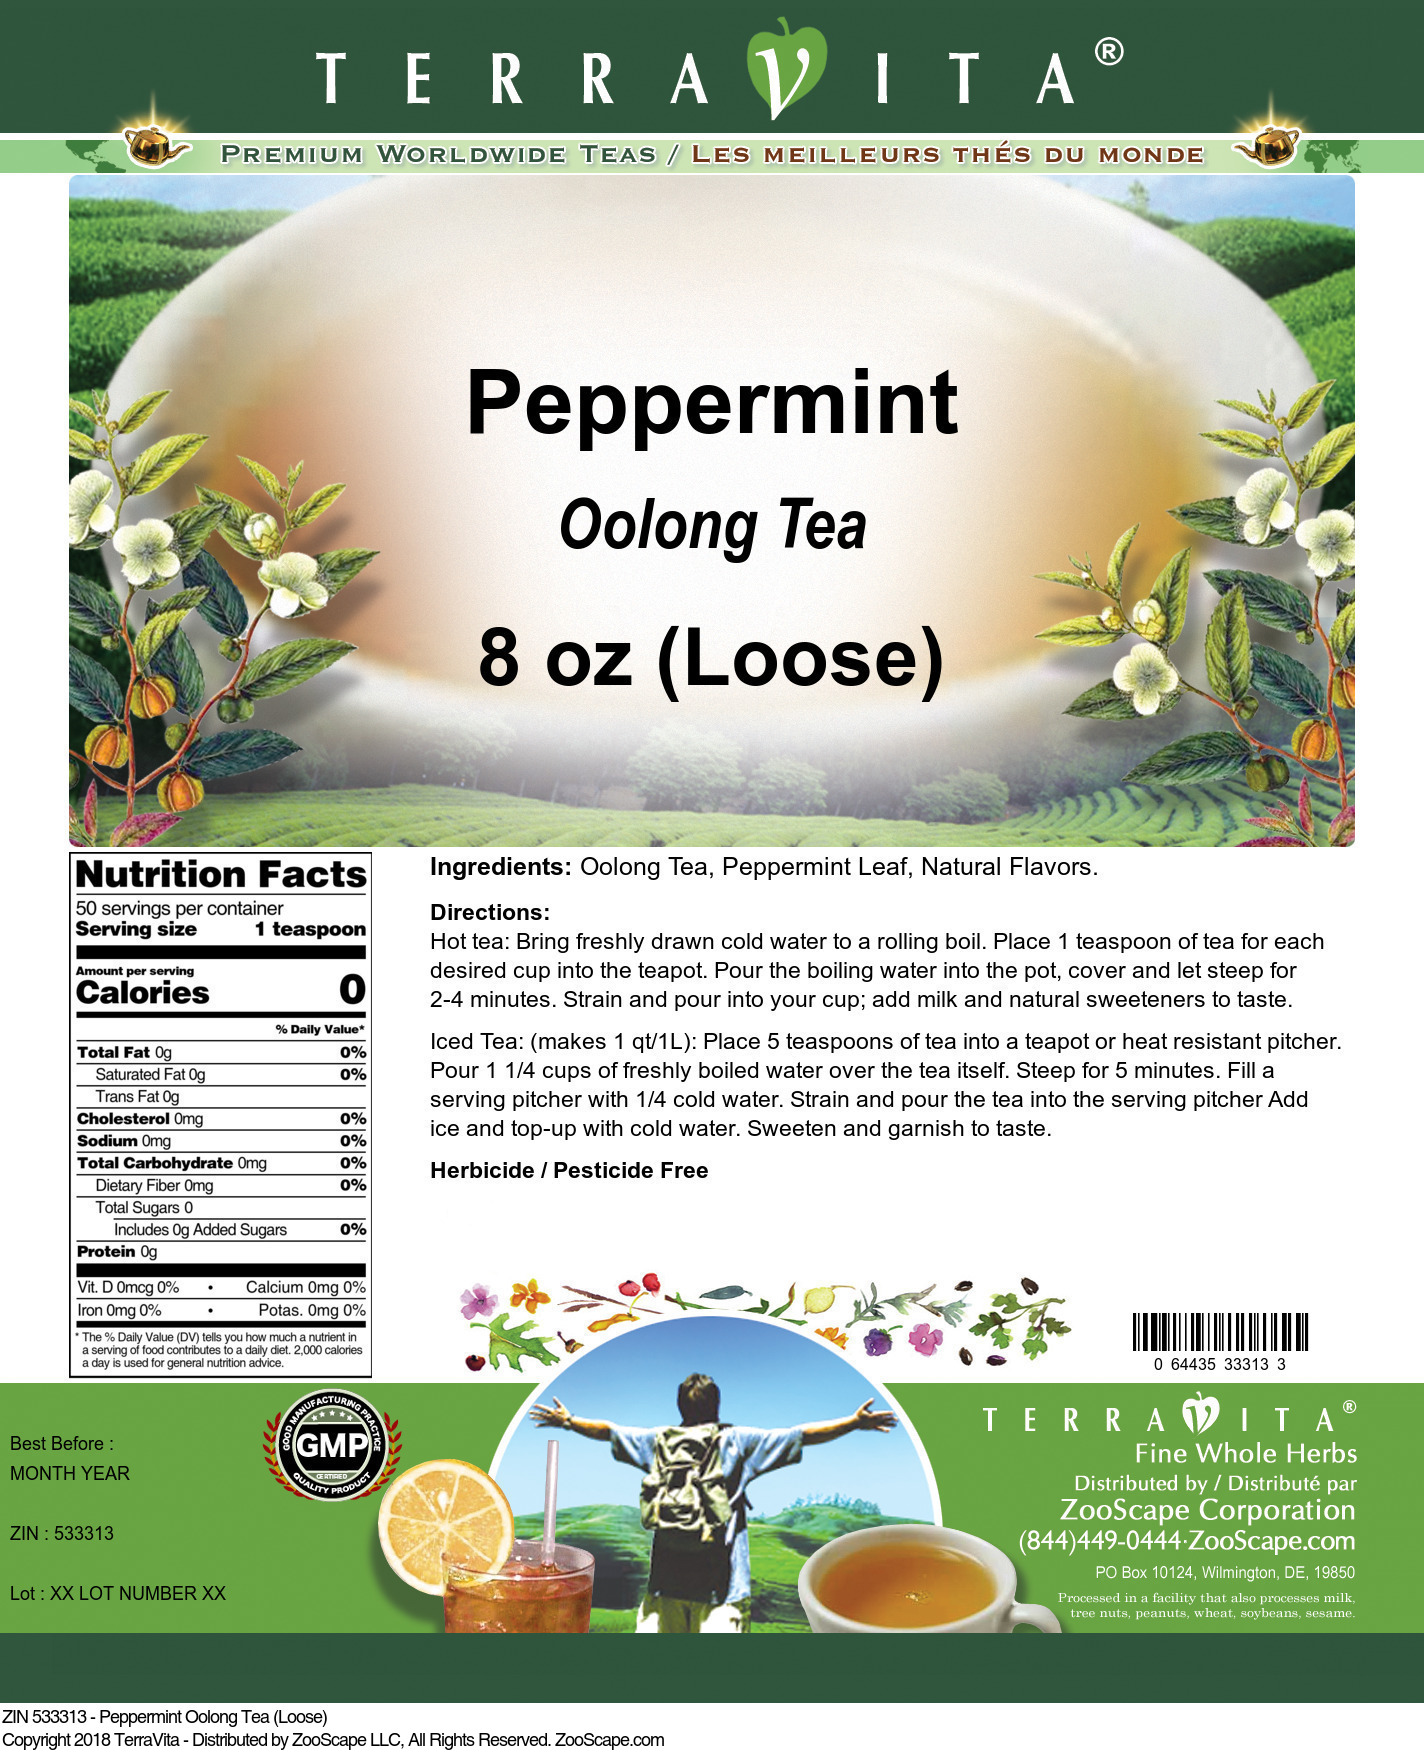 Peppermint Oolong Tea (Loose) - Label